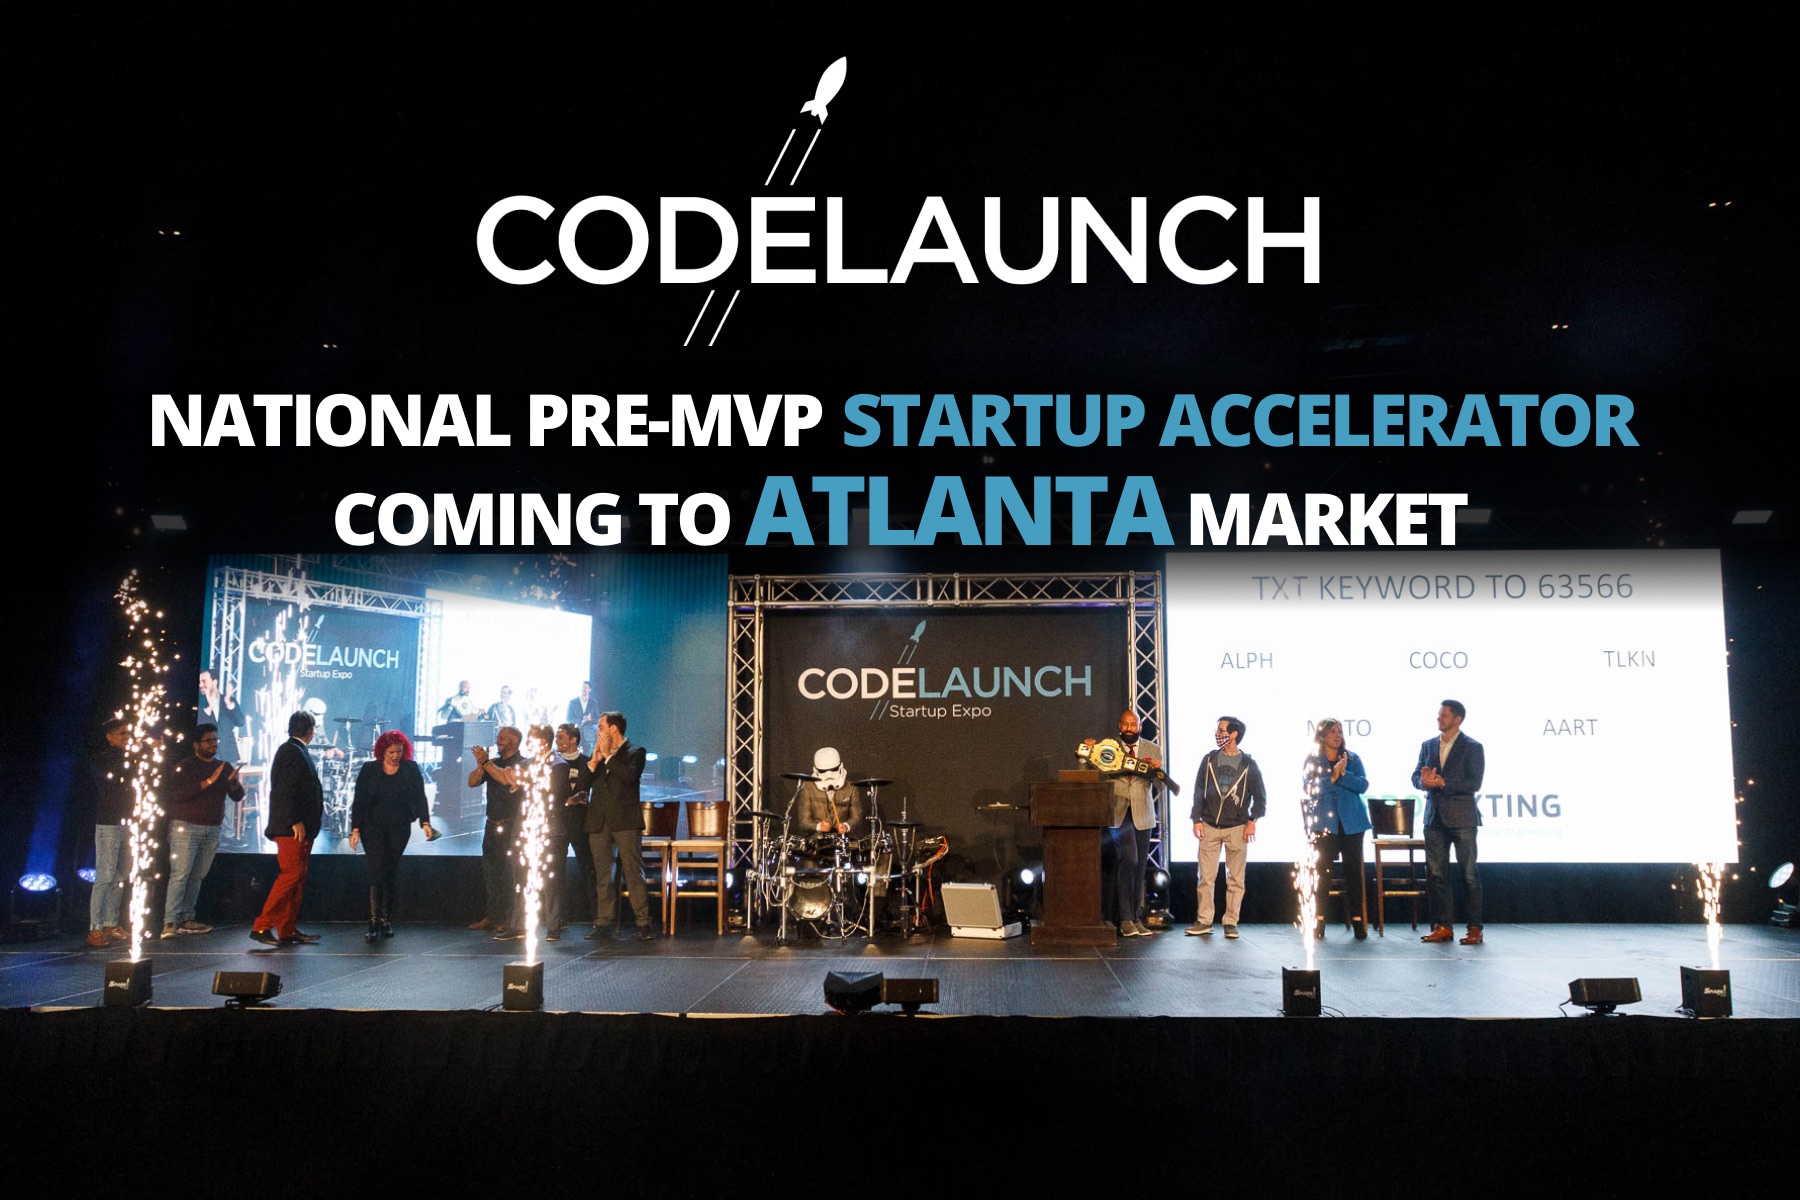 National Pre-MVP Startup Accelerator Coming to Atlanta Market